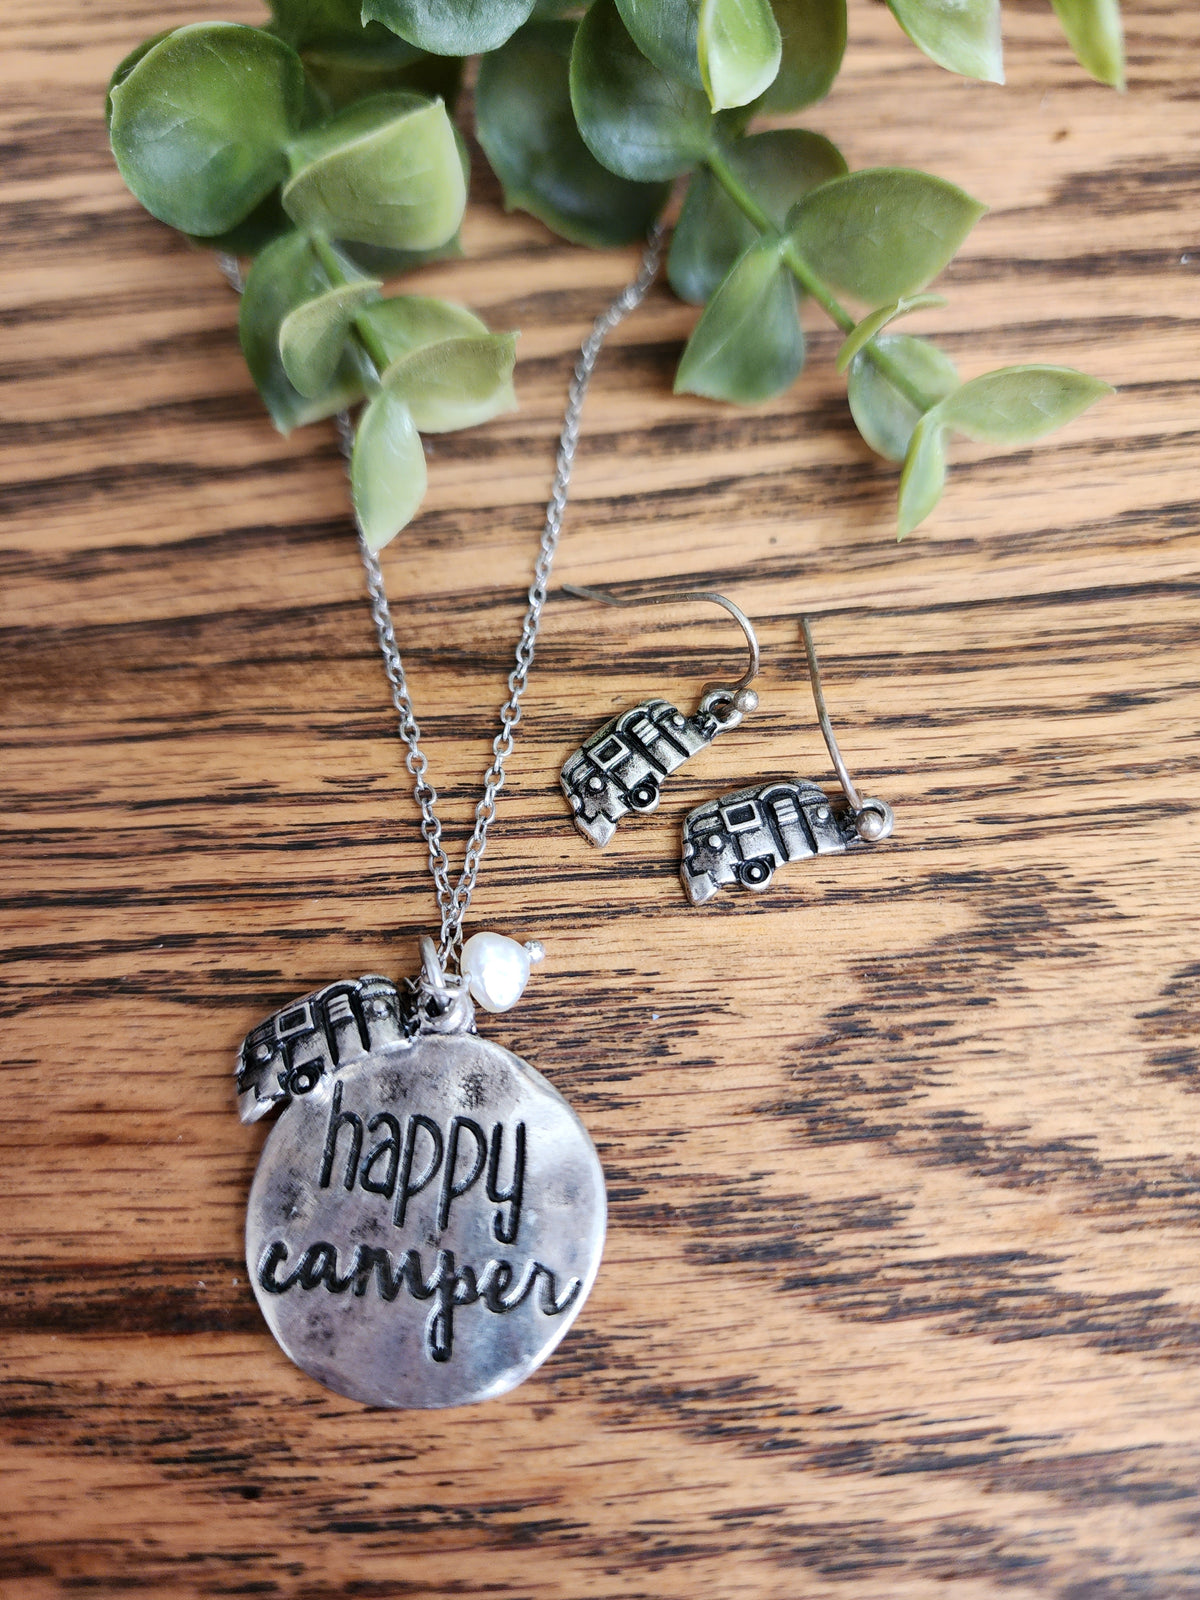 "Happy Camper" stamped necklace